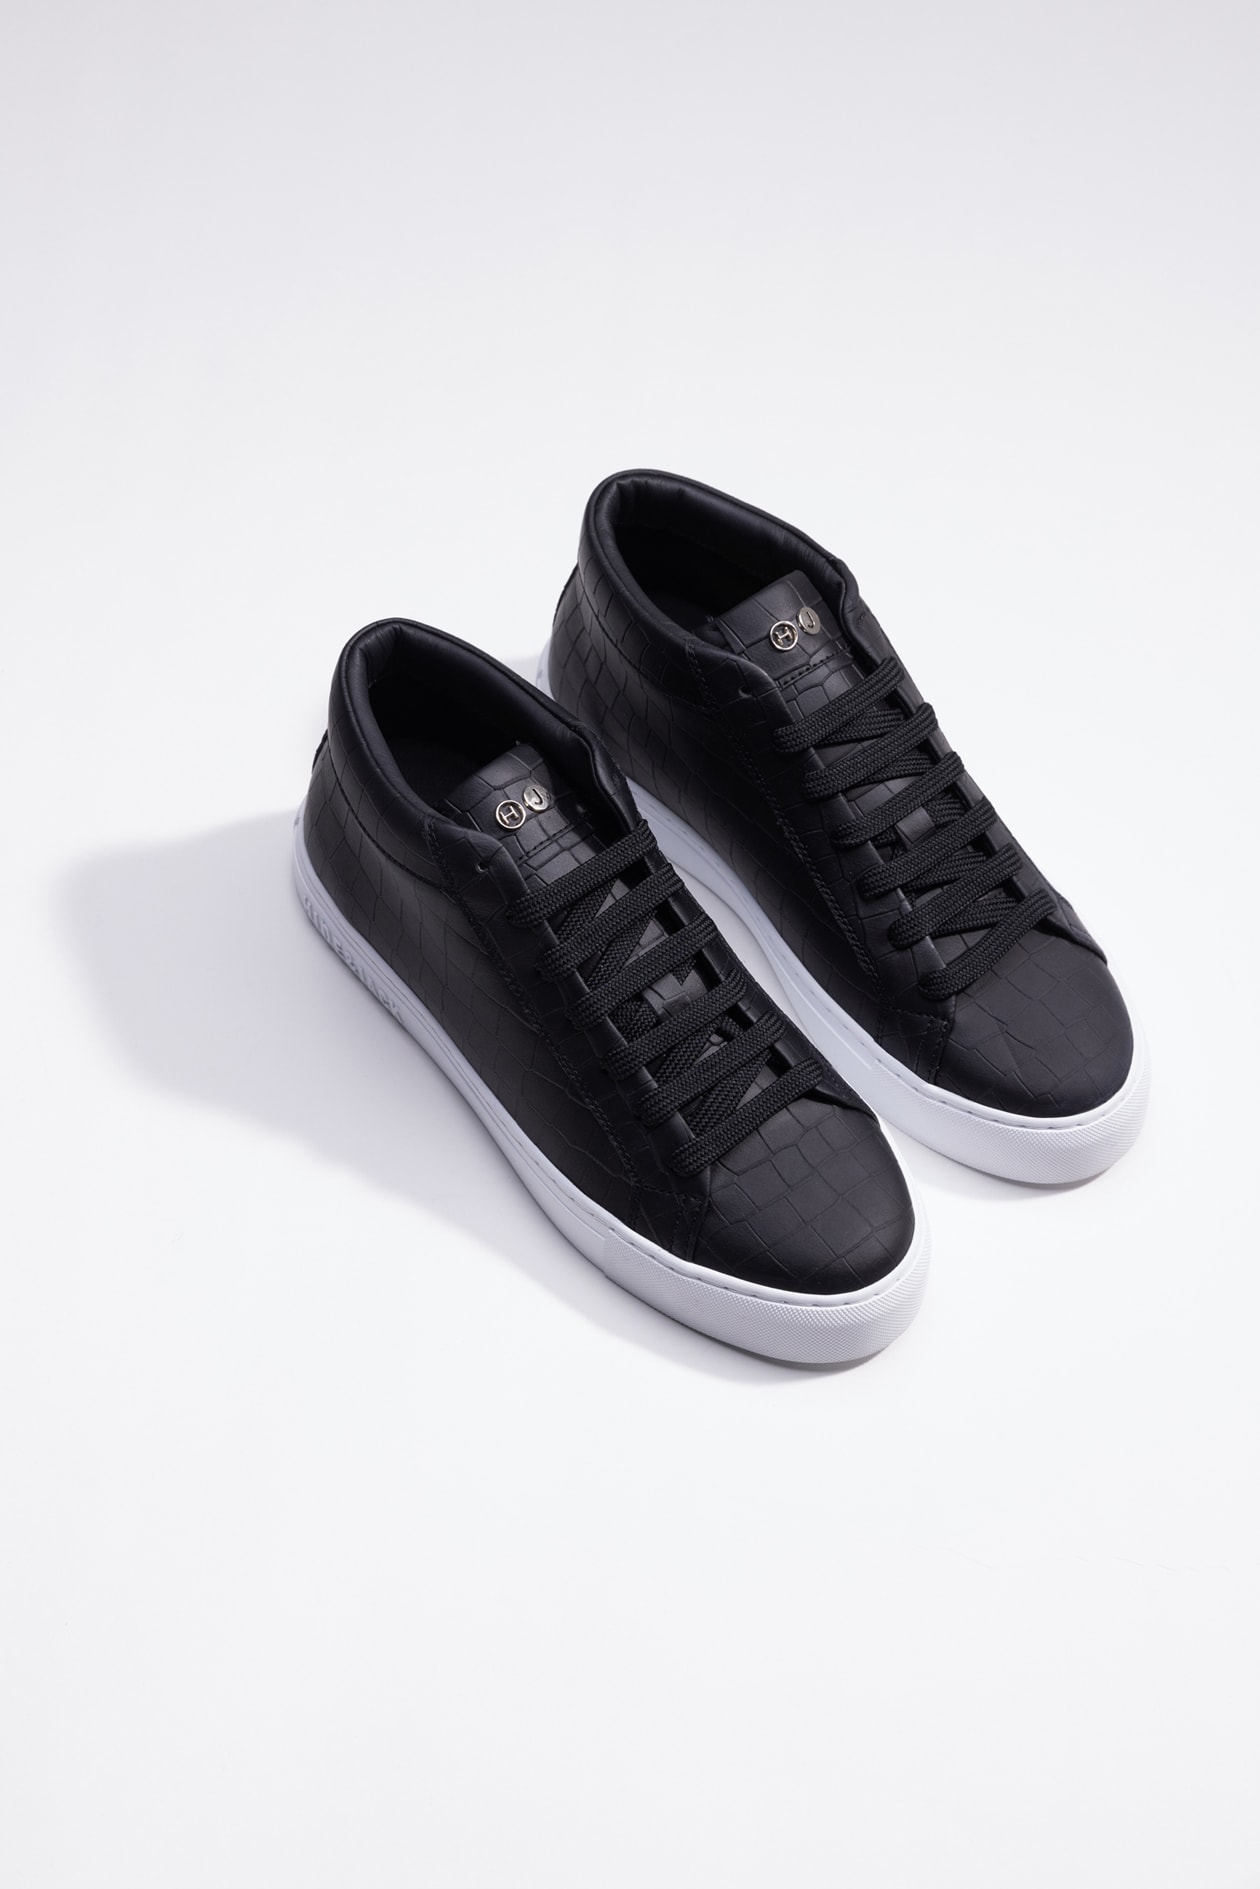 Hide & Jack High Top Sneaker - Essence Black White